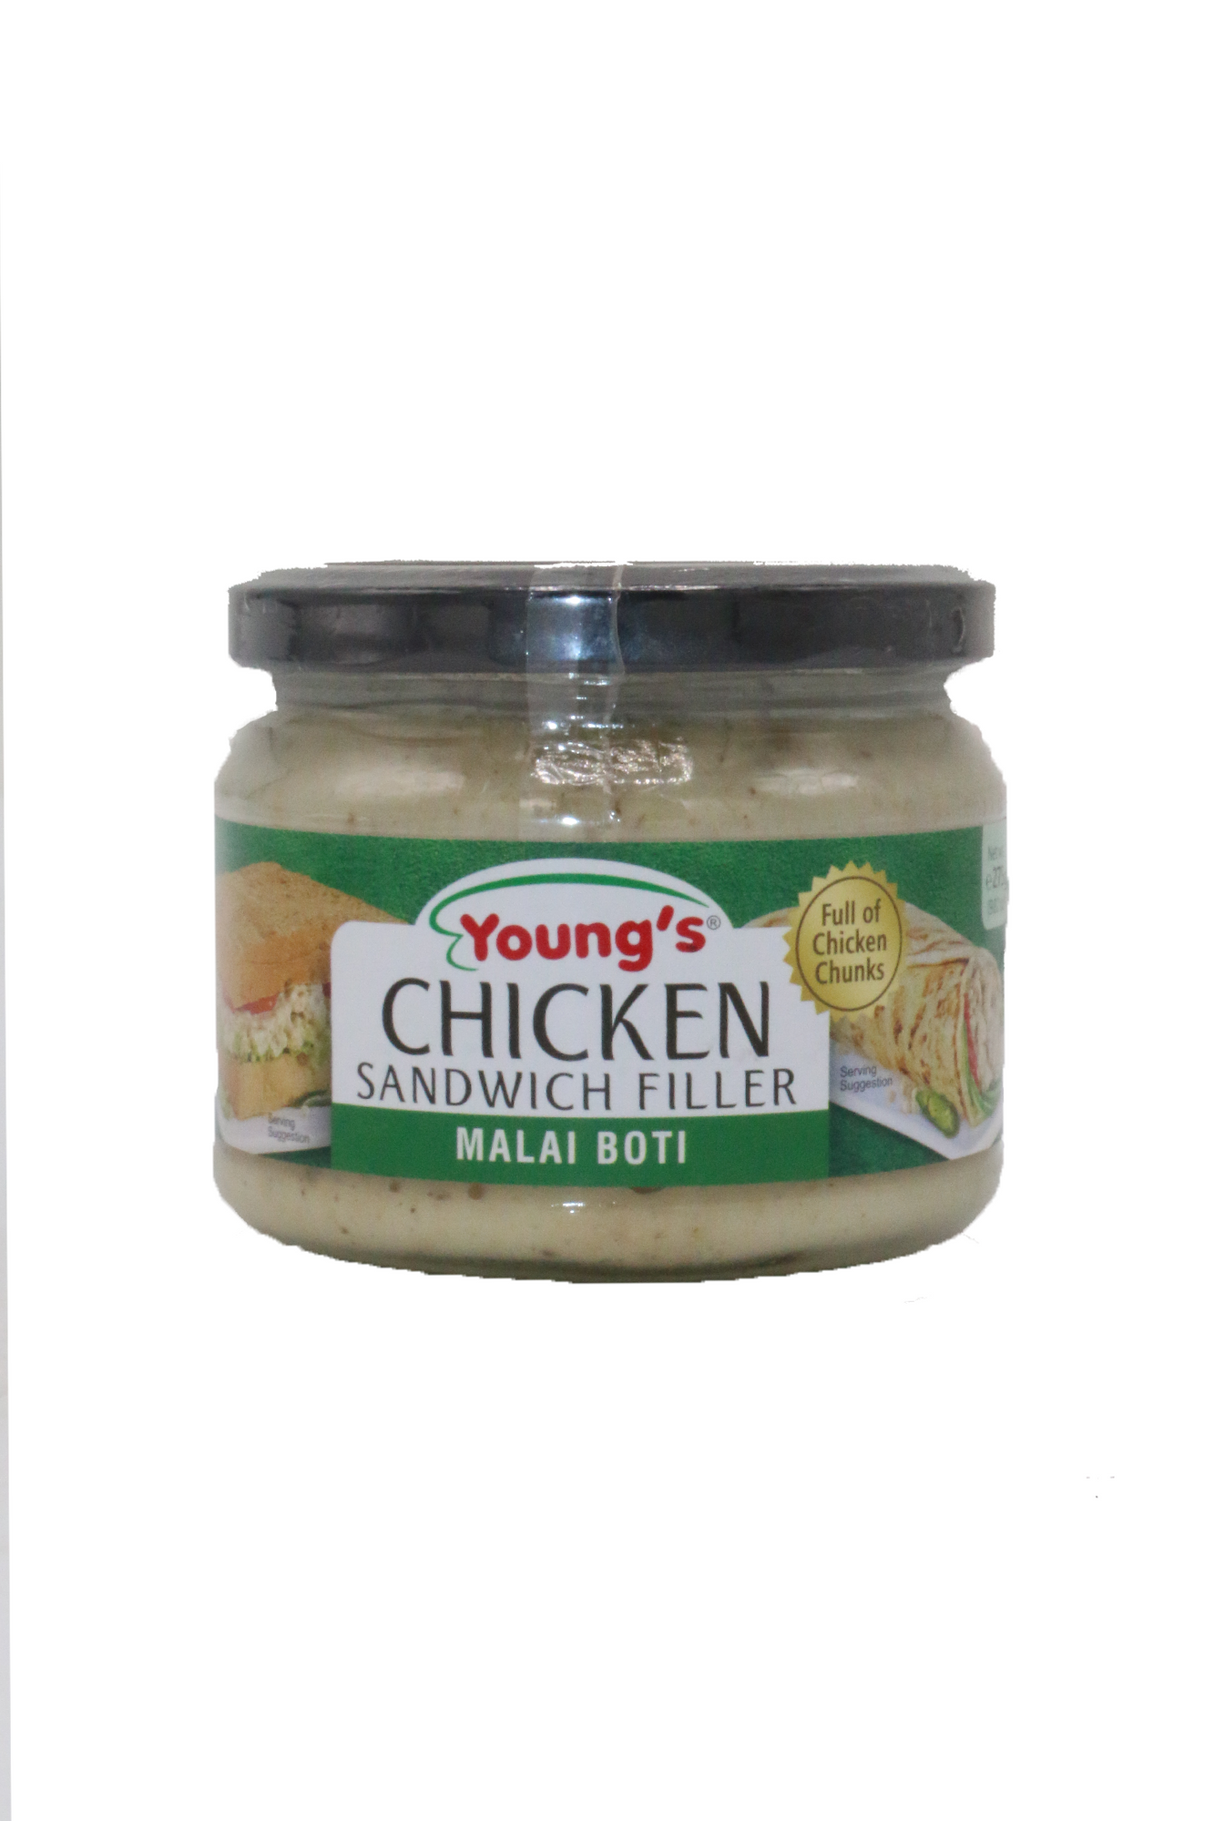 youngs chicken sandwich filler malai boti 275g